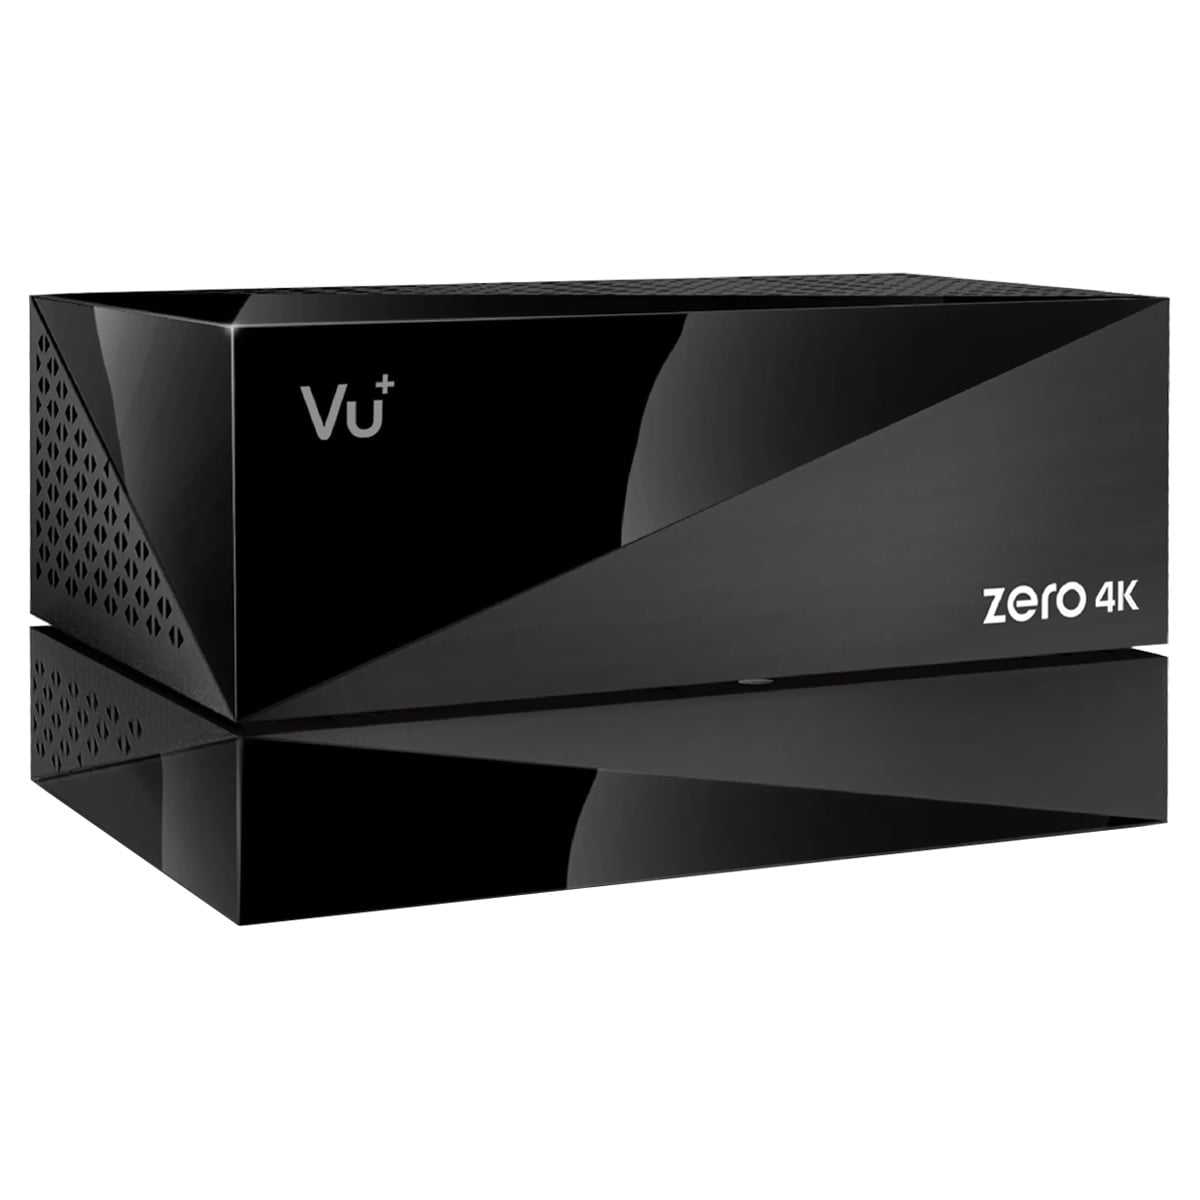 VU+ Plus Zero 4K DVB-C/T2 Kabel Receiver inkl. PVR-Kit (UHD Linux HbbTV LAN) 1TB von VU+